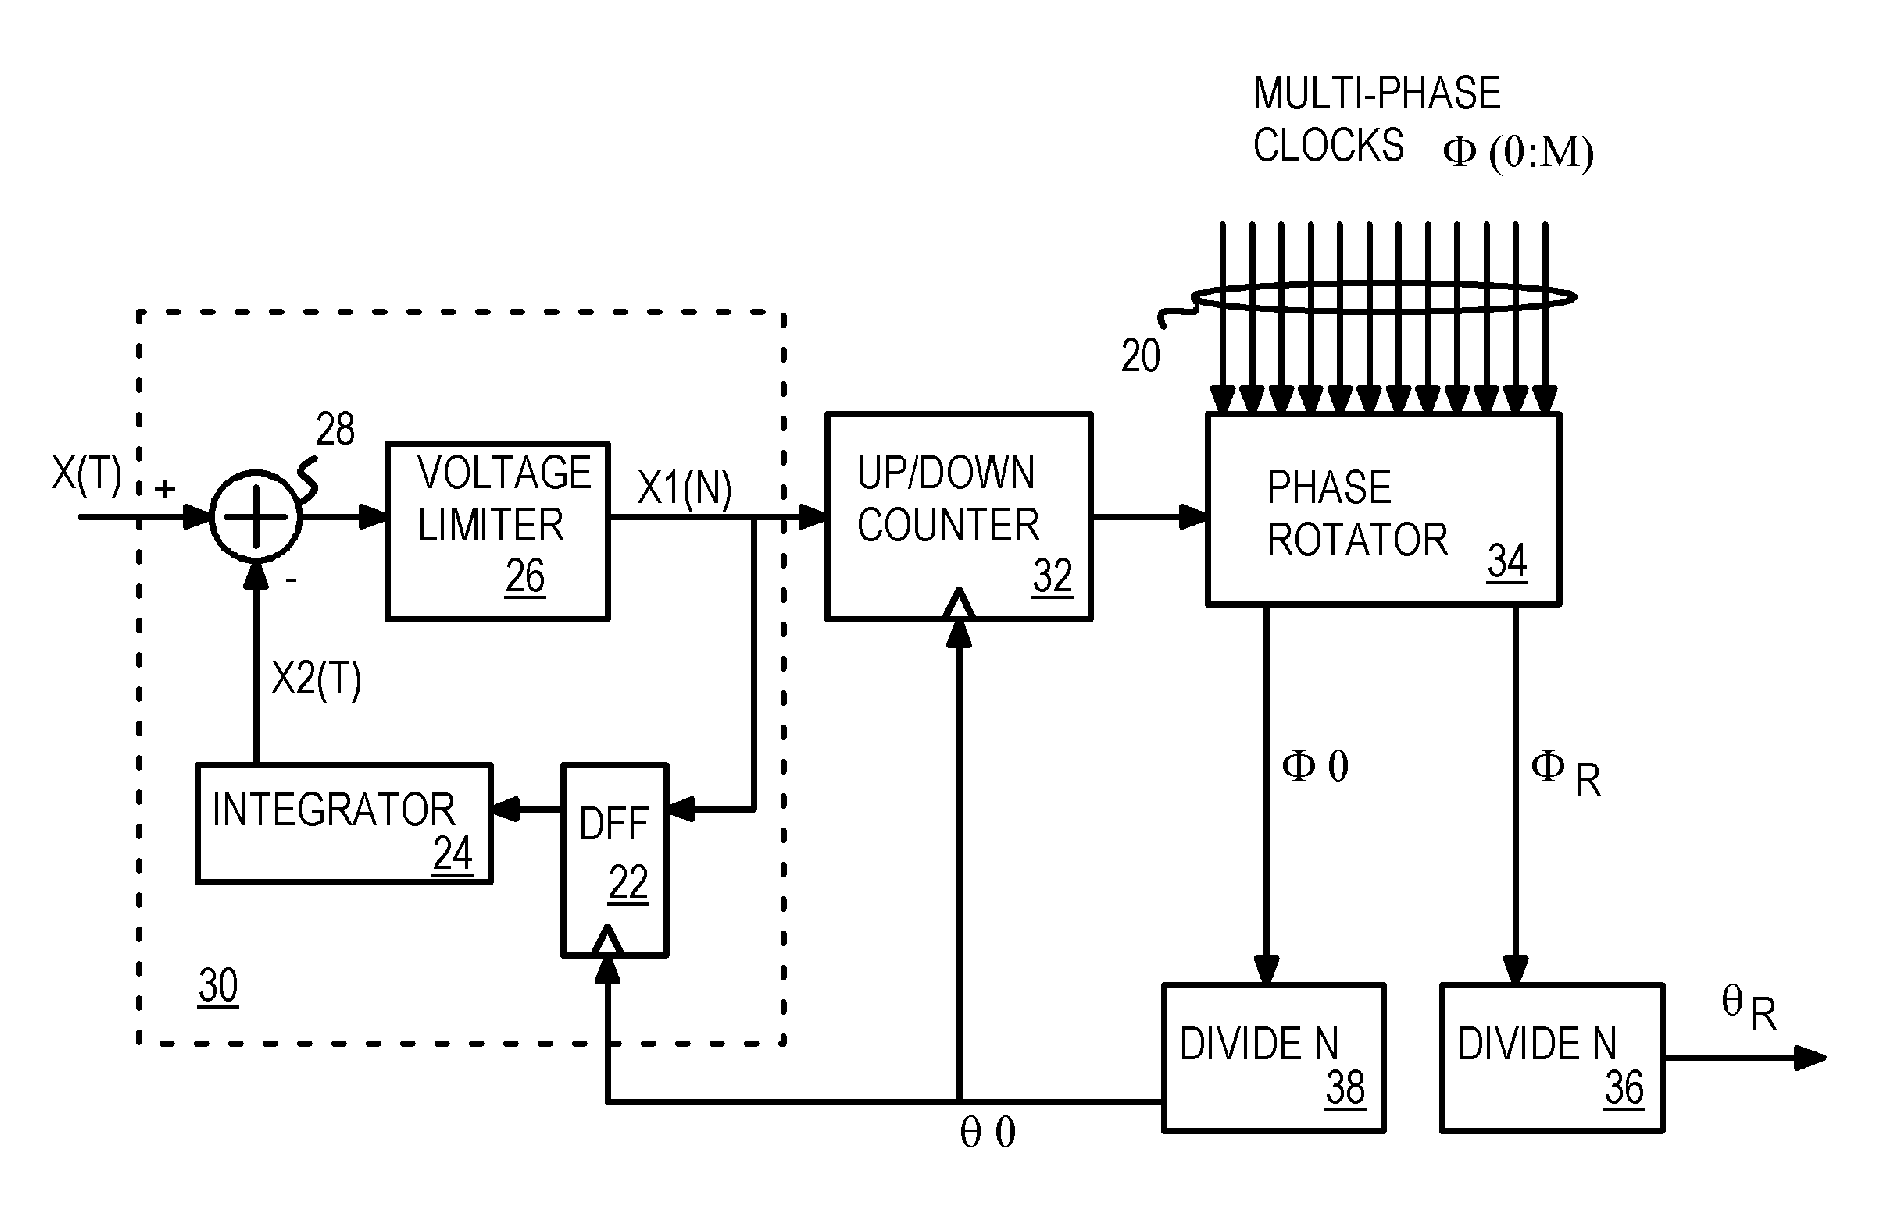 All-digital phase modulator/demodulator using multi-phase clocks and digital PLL